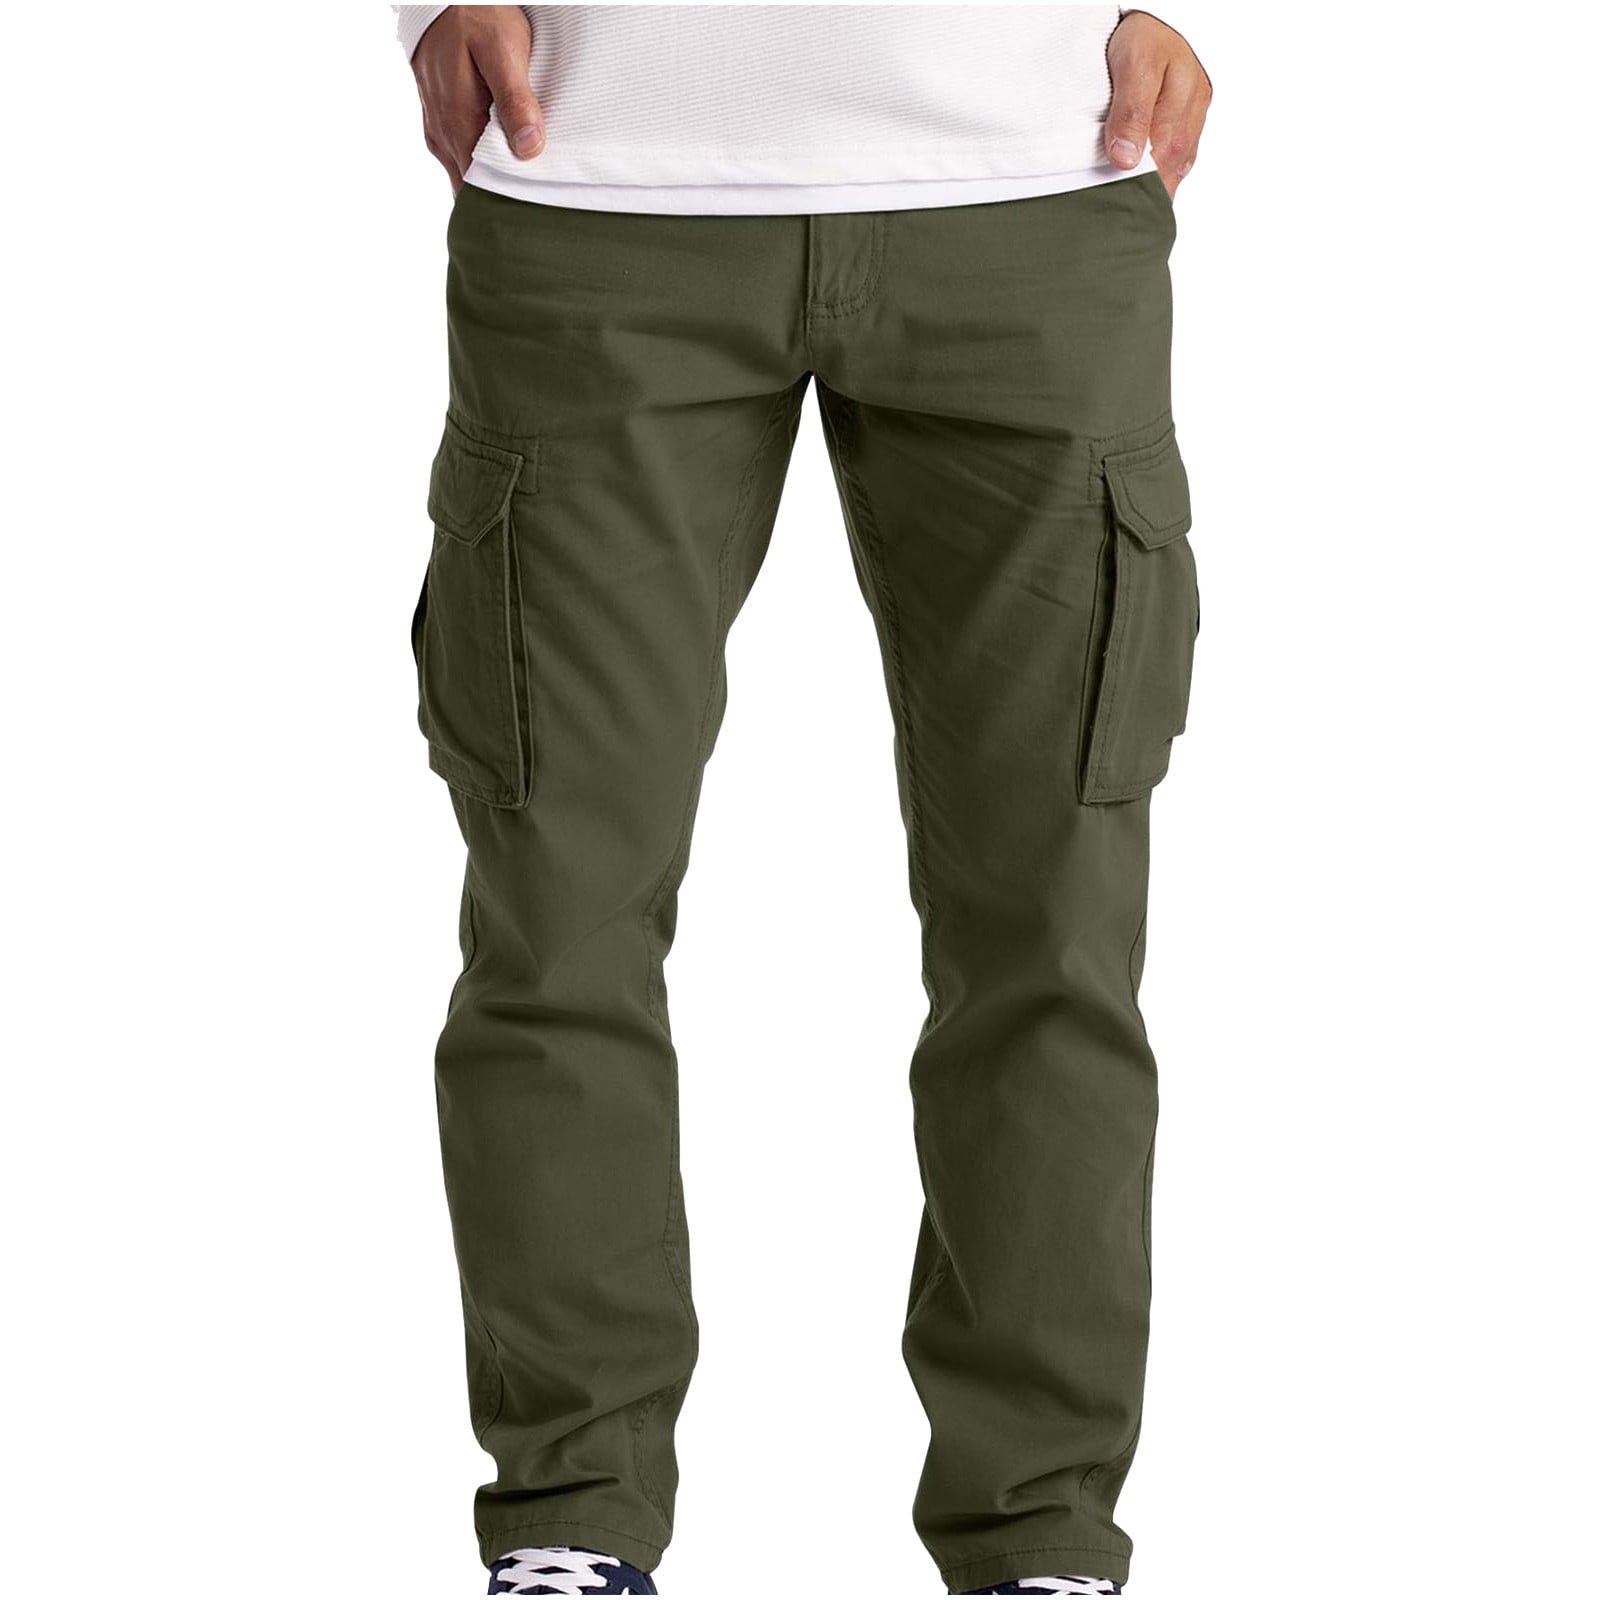 cargo pants | Buy cargo pants for mens online - Daks Neo – DAKS NEO  CLOTHING CO.INDIA